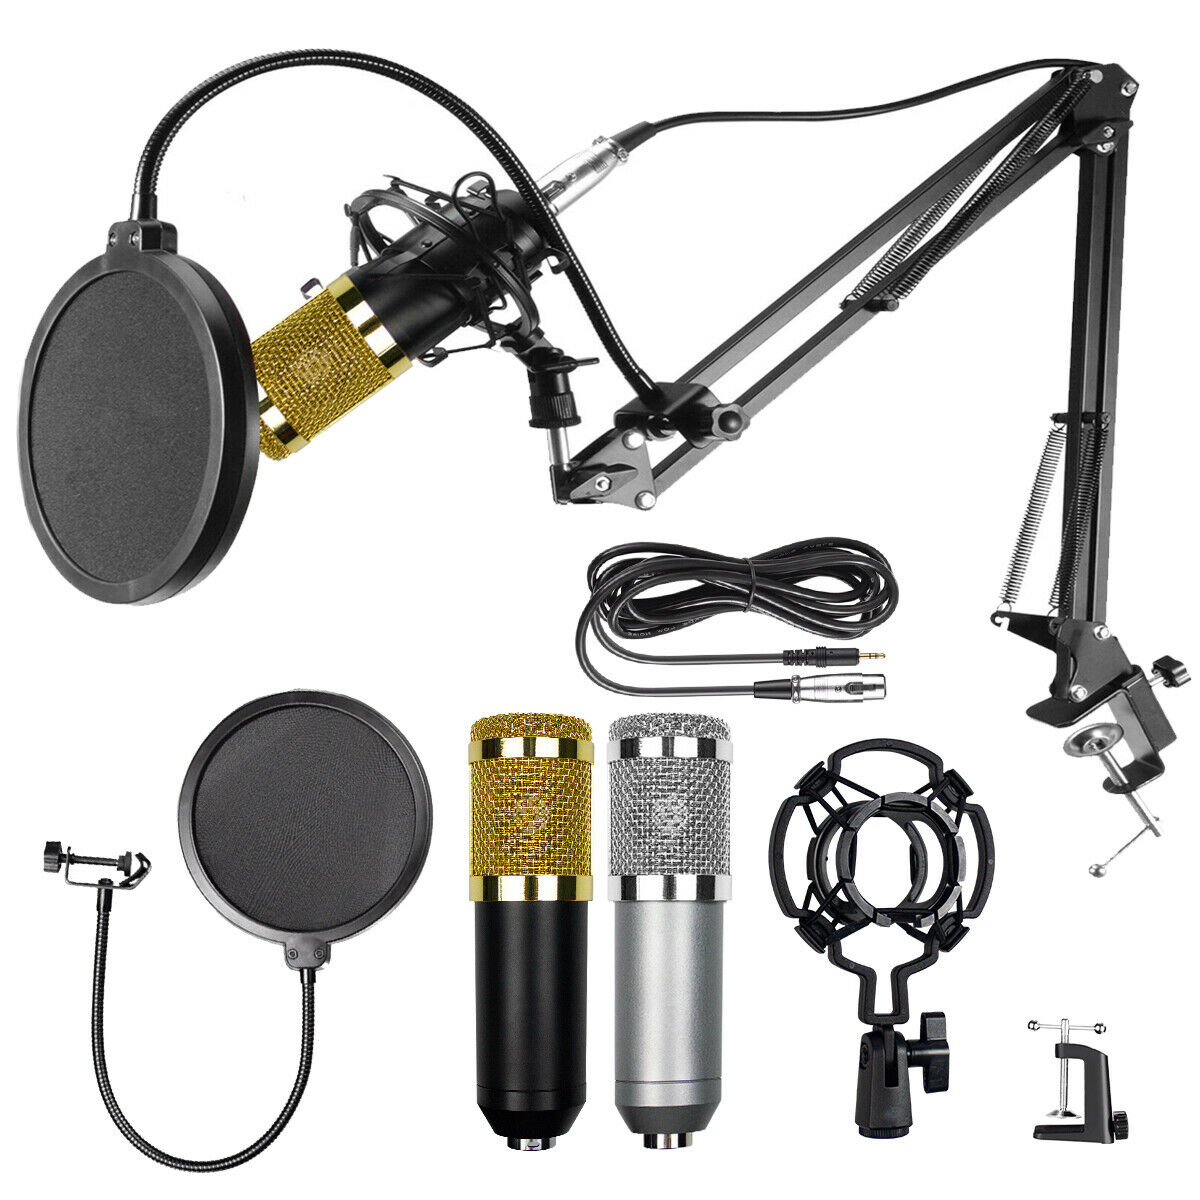 Bm-800 Condenser Microphone Kit Studio Pop Filter Boom Scissor Arm Stand Mount